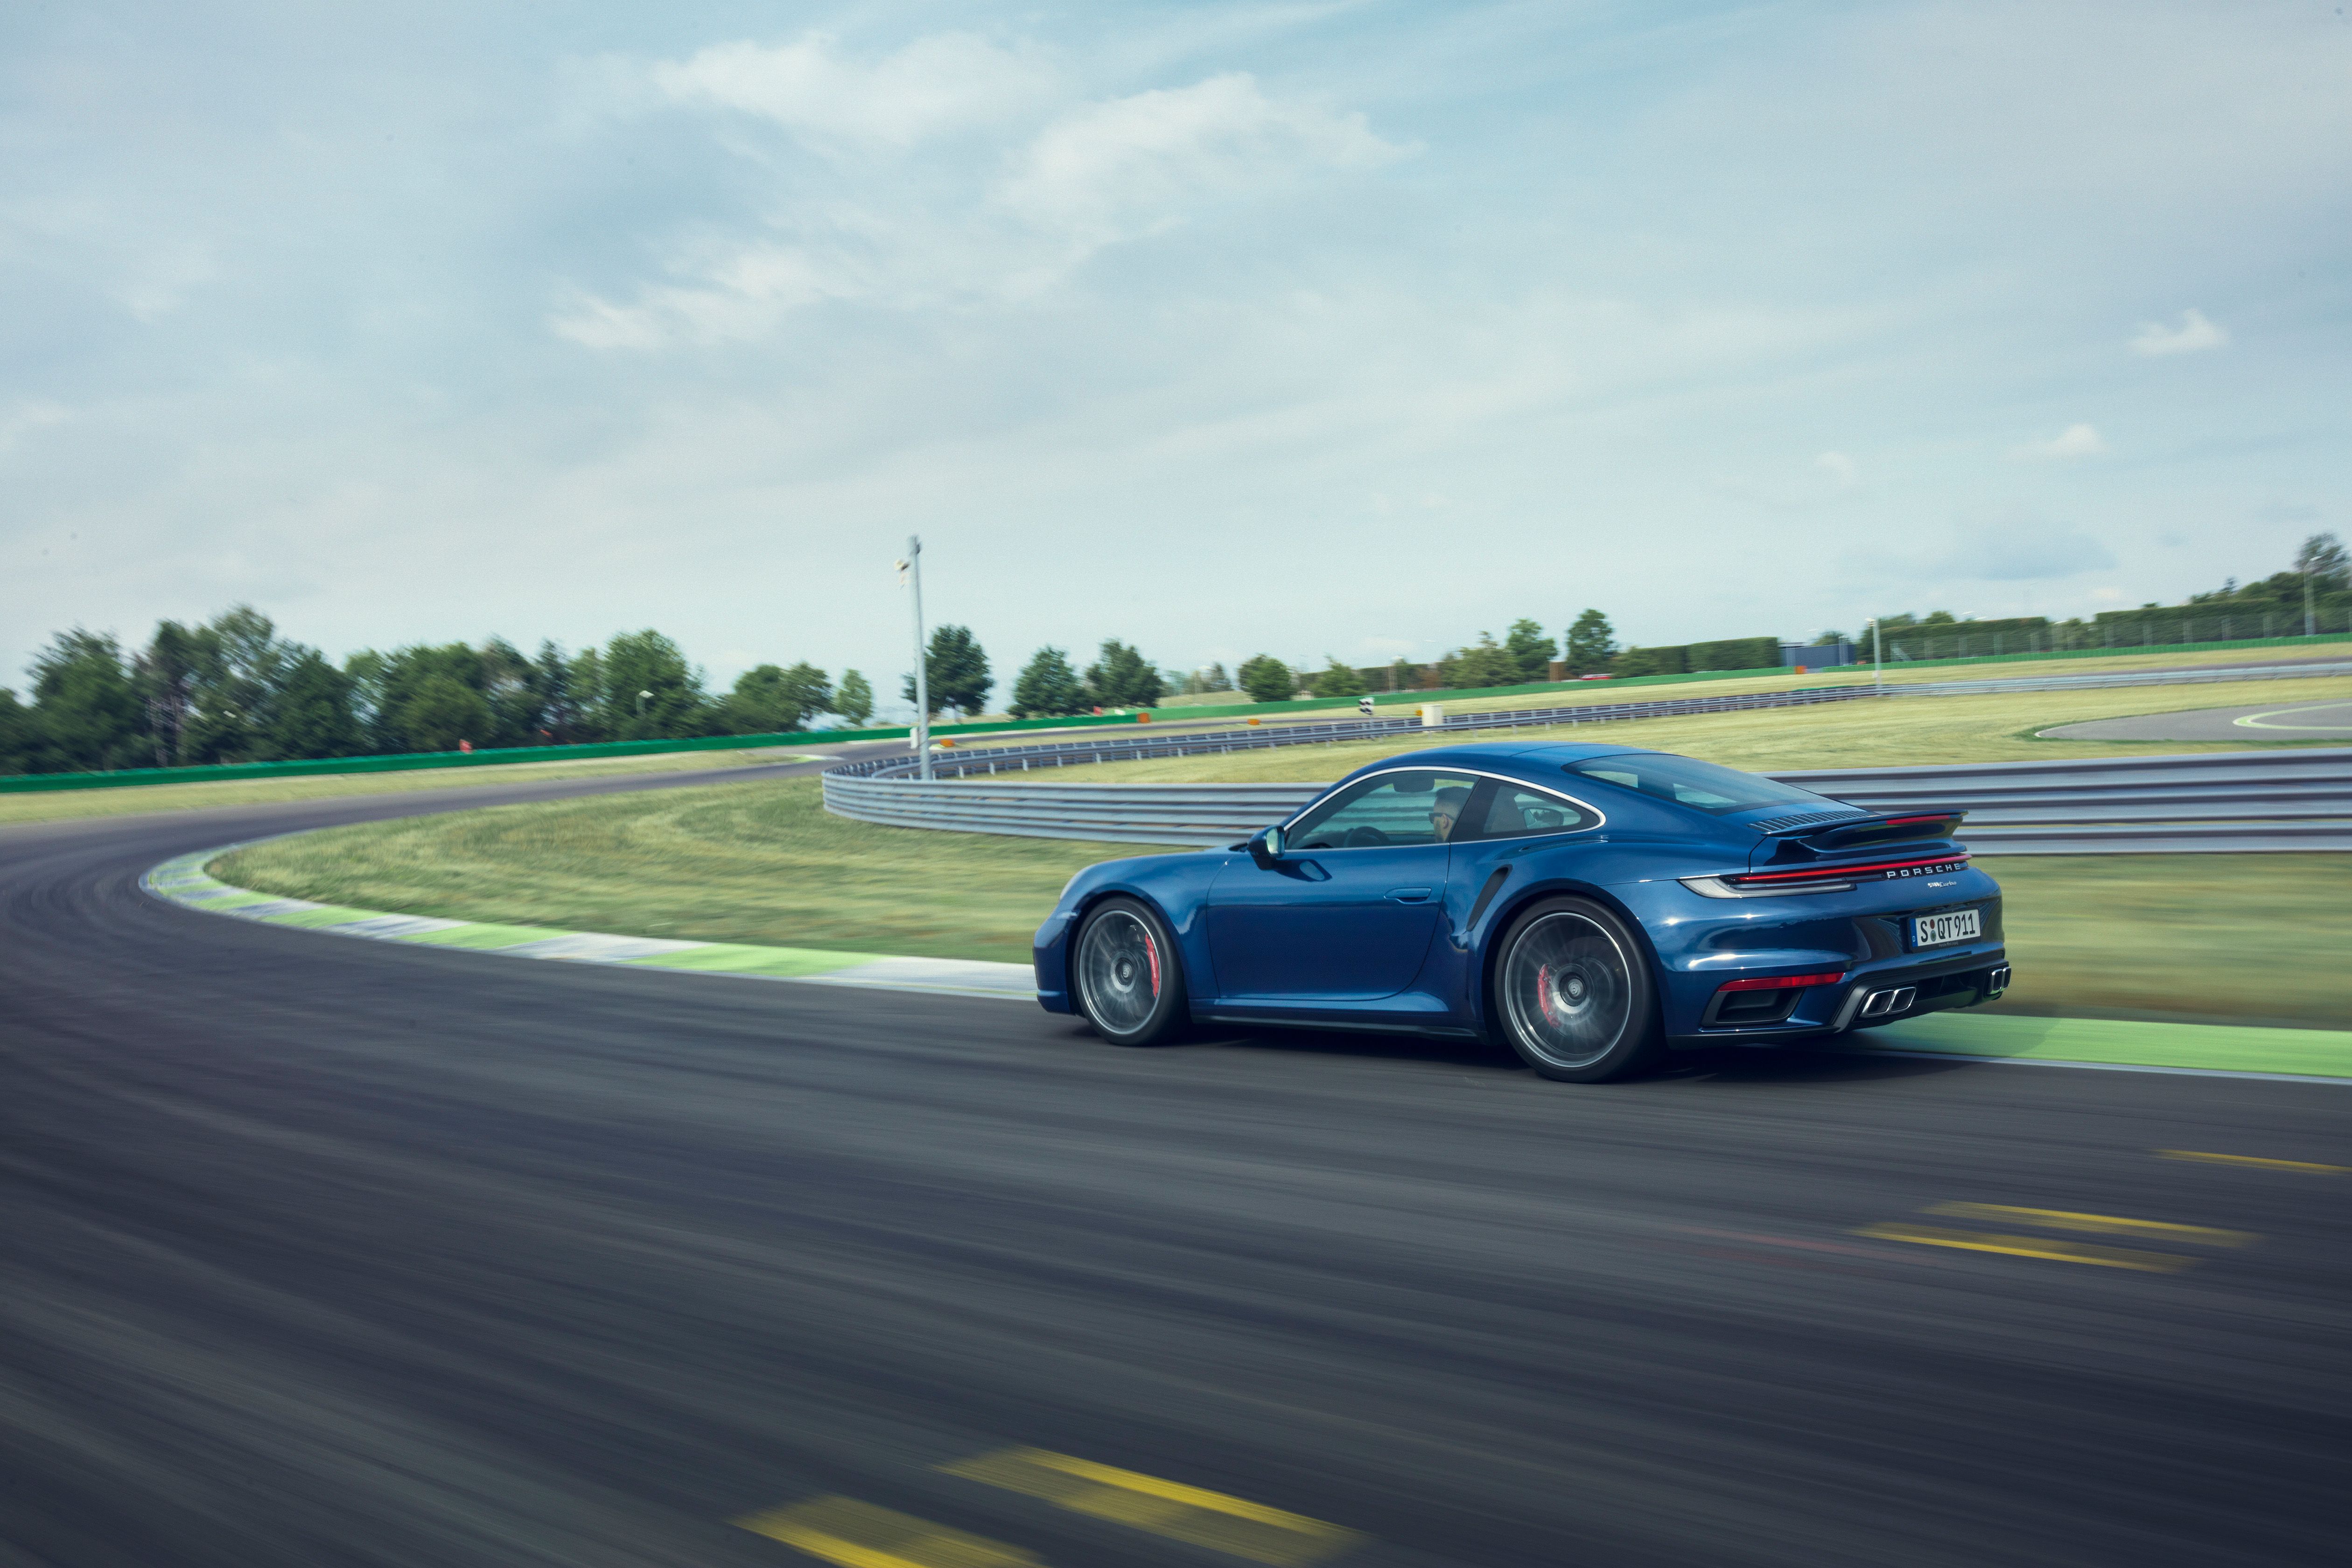 Porsche 911 Turbo Blue